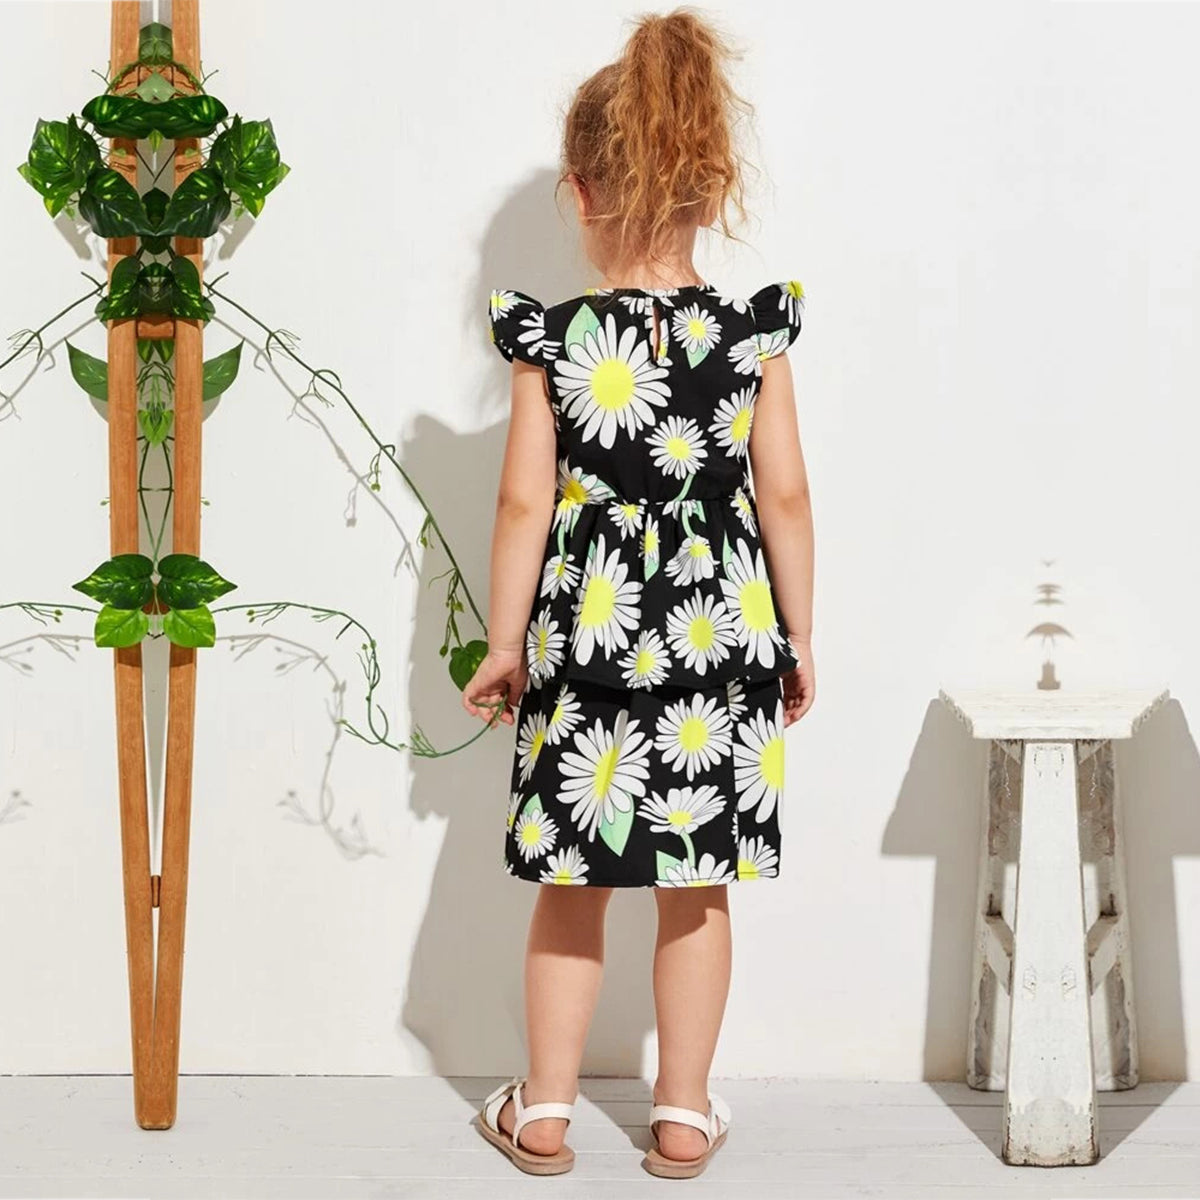 Stylish BabyGirl's Light Green Striped Sunflower & Floral Dresses_Frocks (Combo Pack Of 3) For Kids.